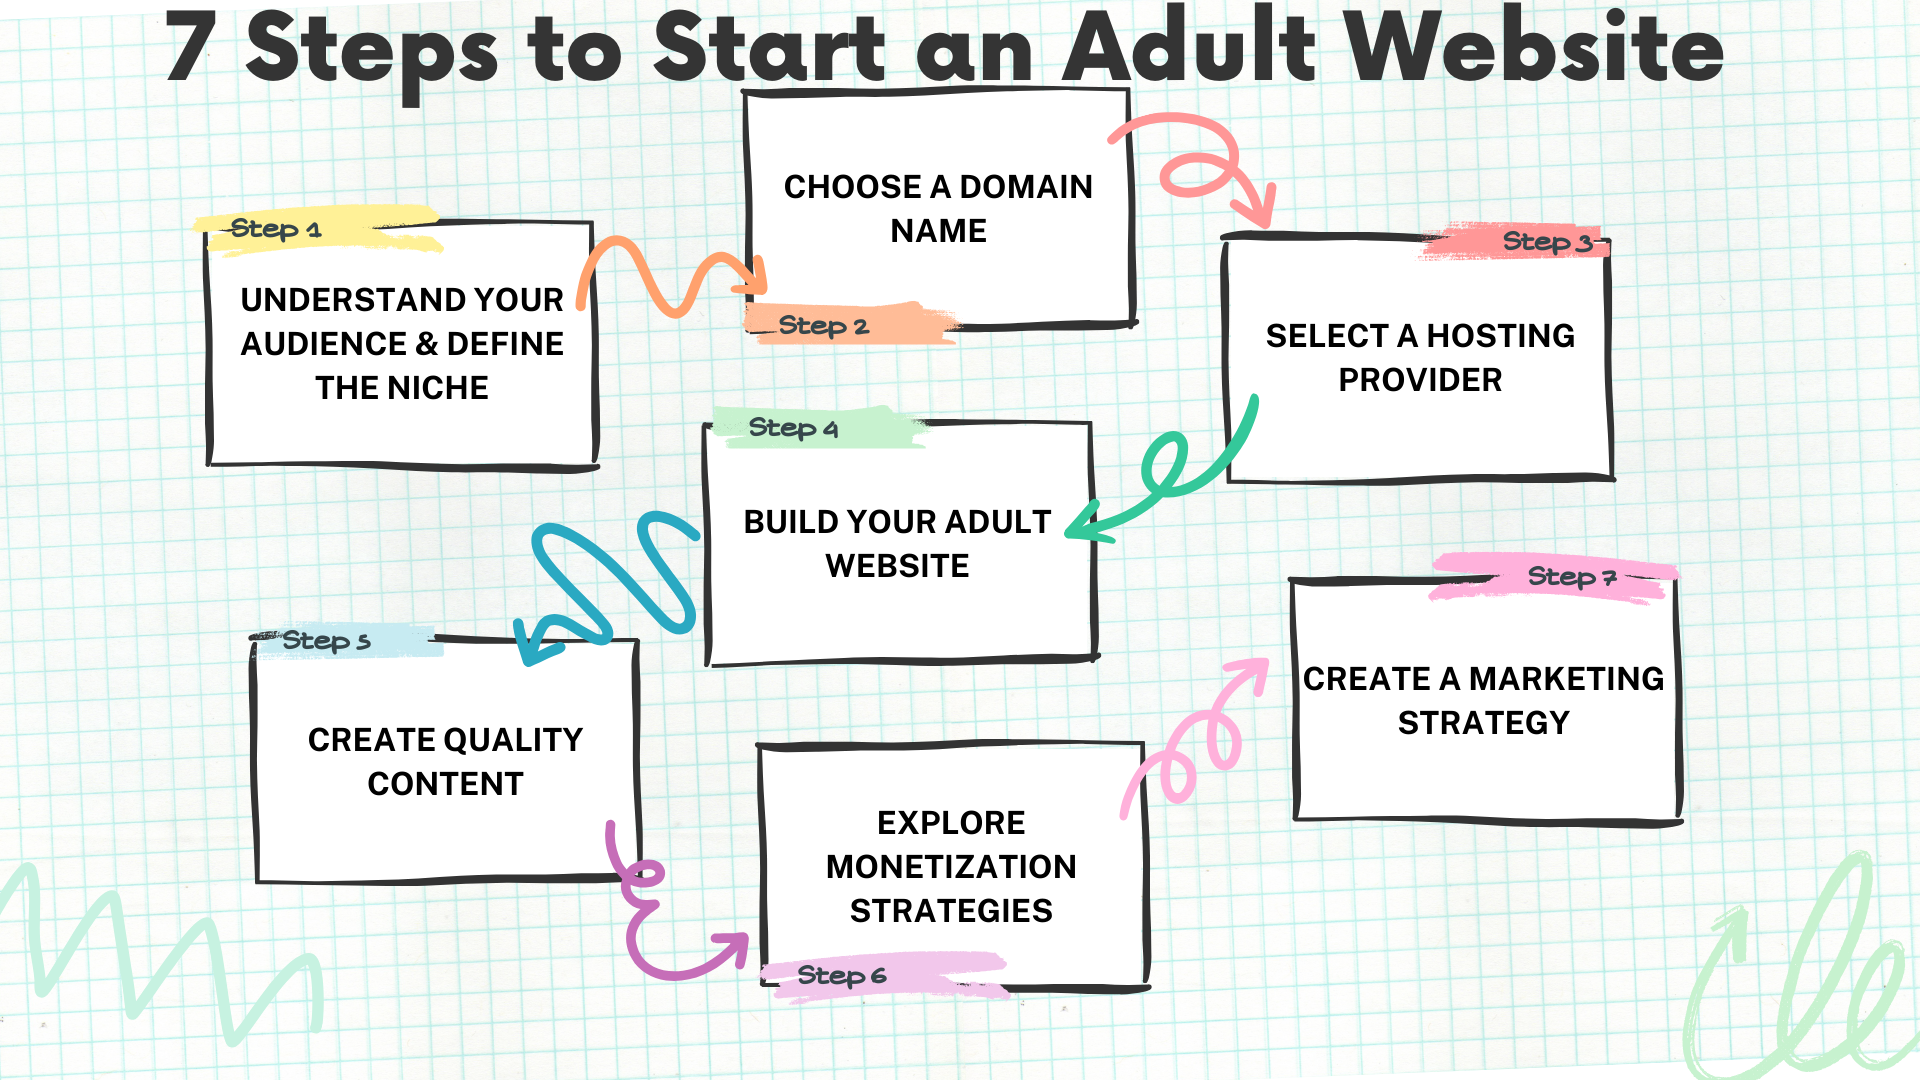 Steps to Start an Adult Website